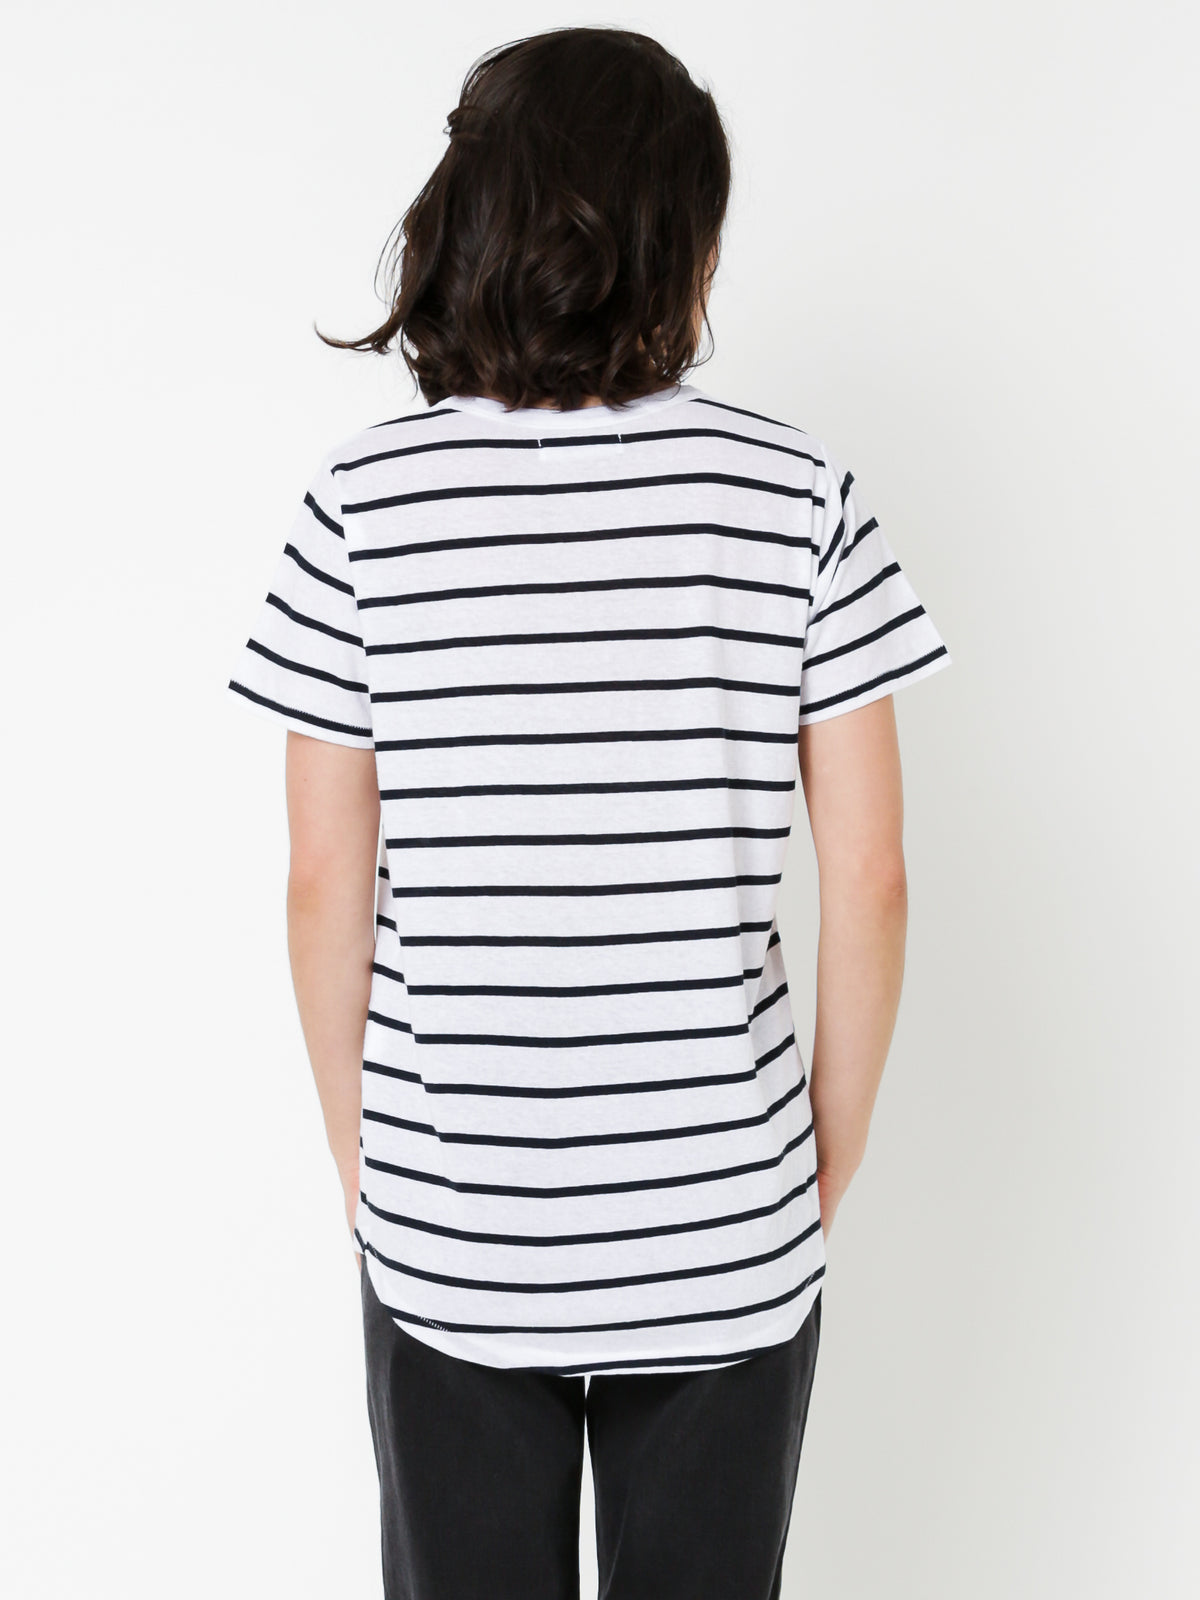 Coastline Stripe T-Shirt in White